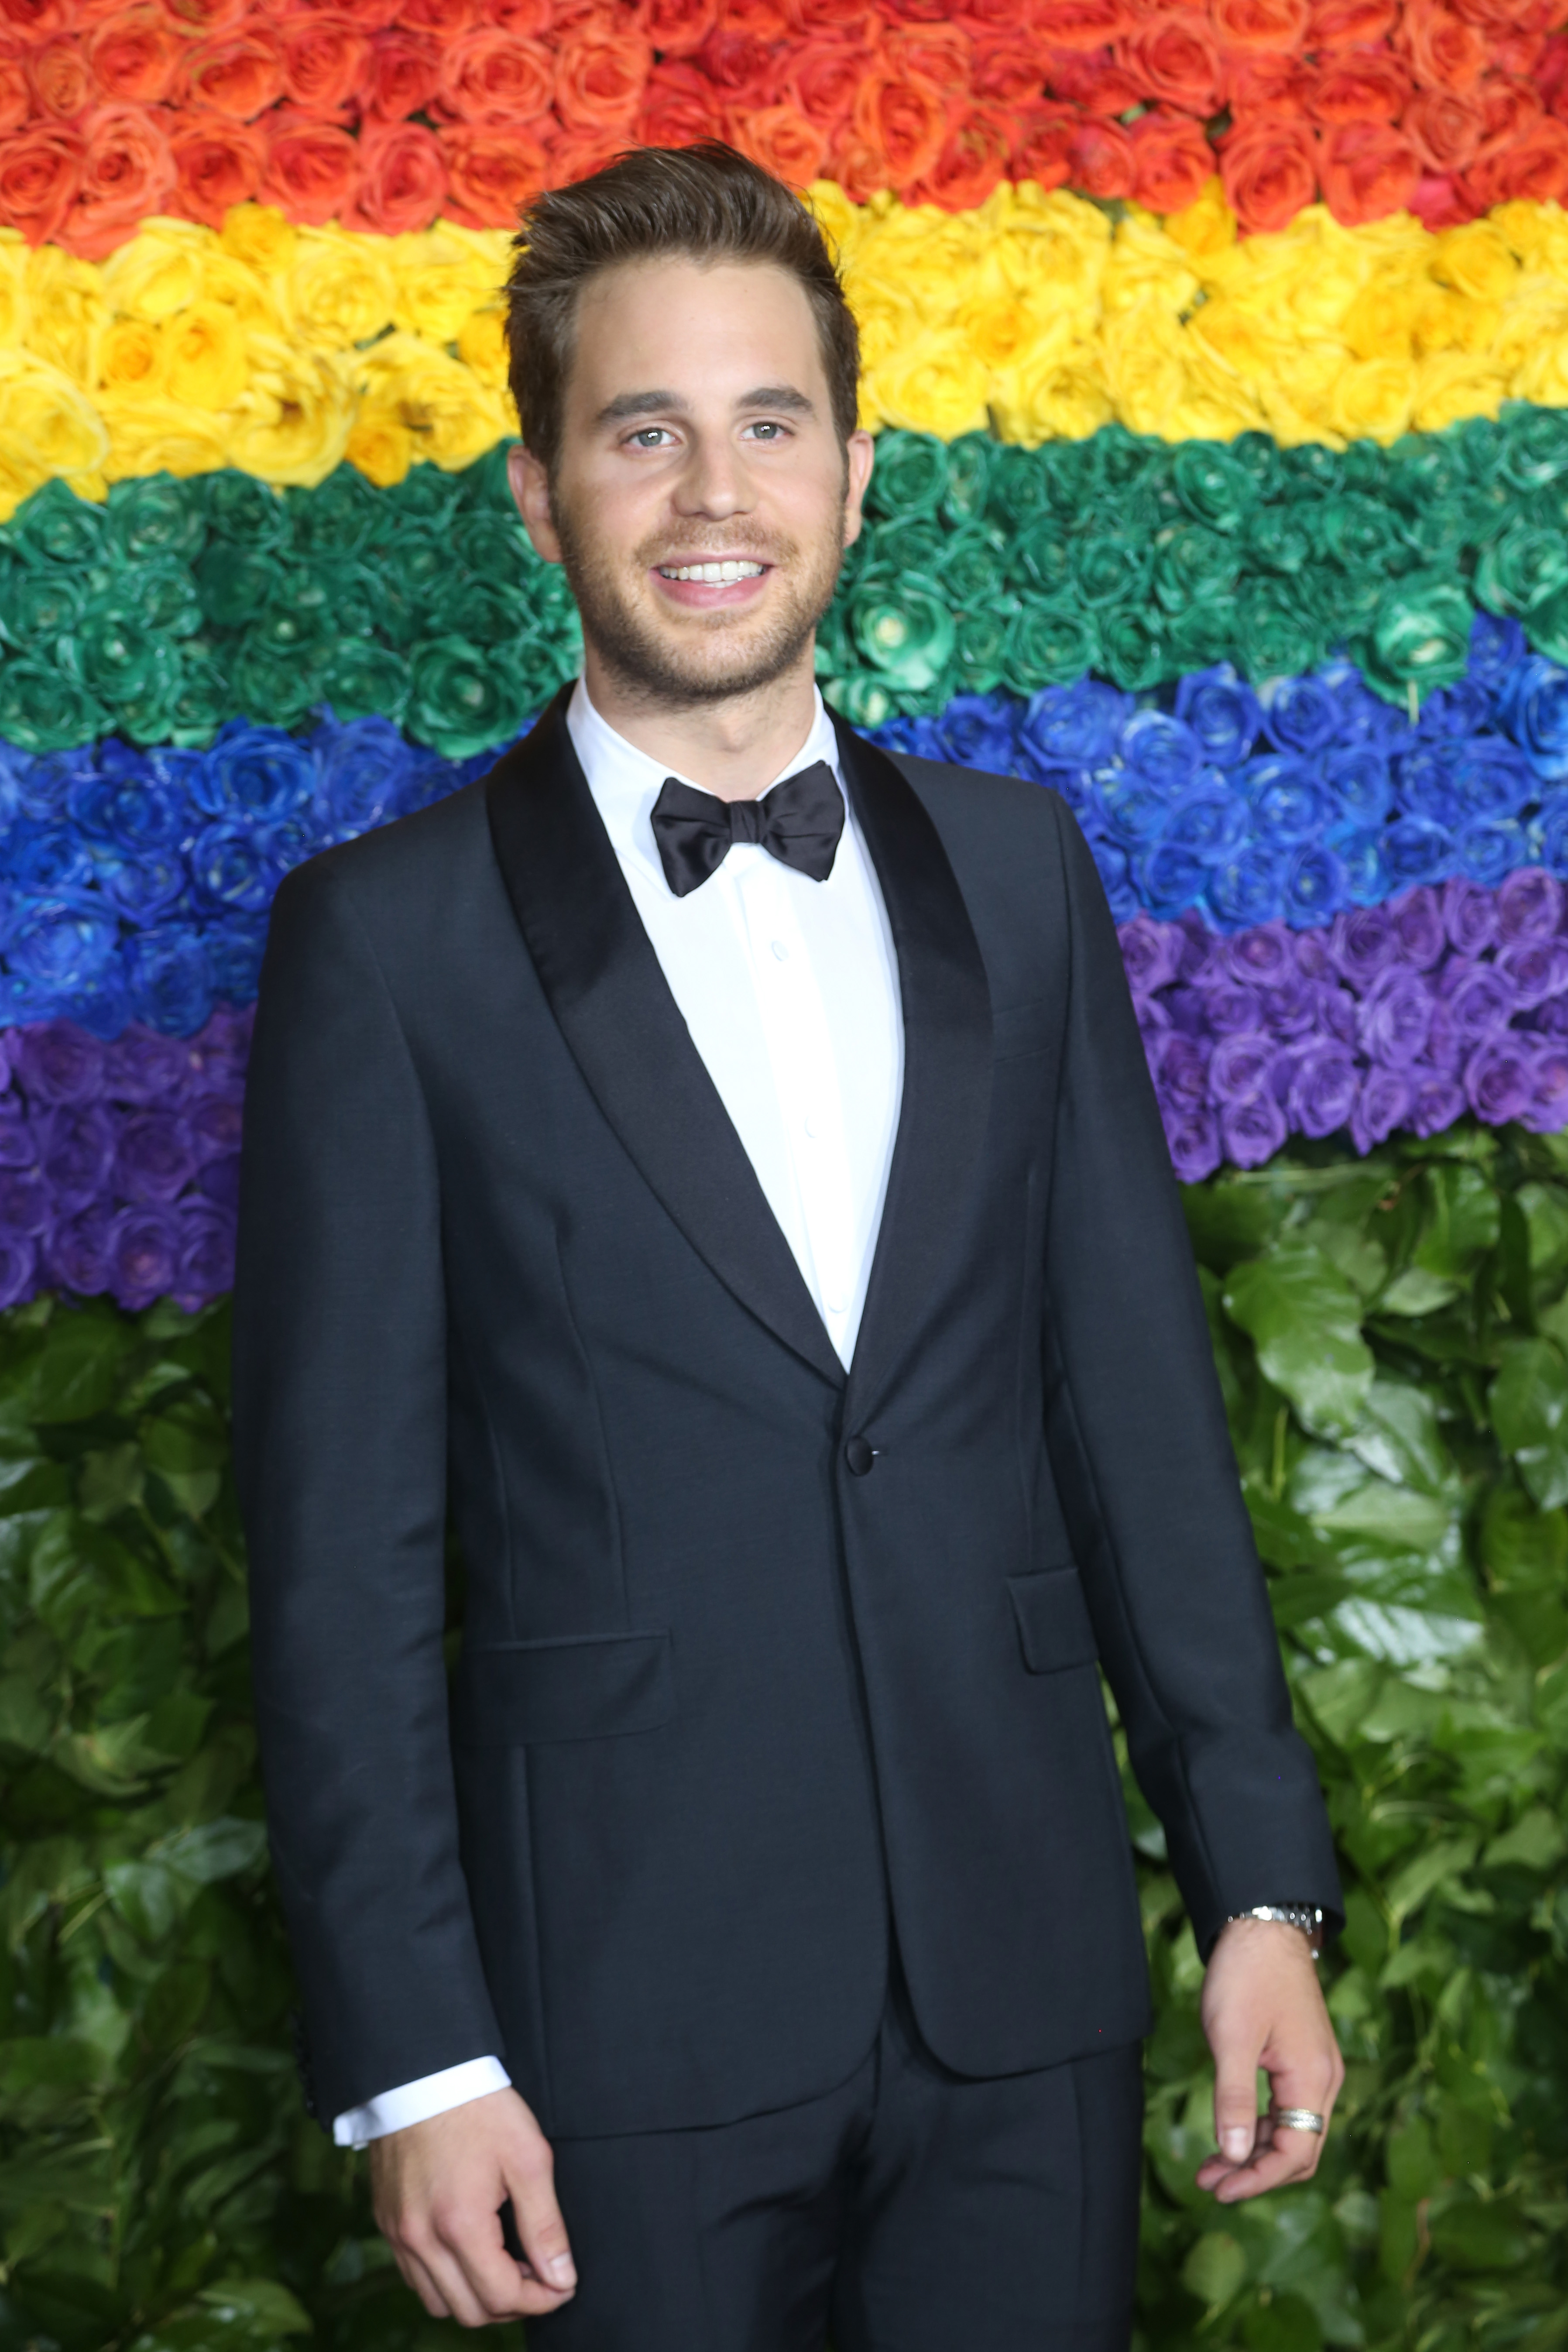 Ben Platt attends the 73rd Annual Tony Awards at Radio City Music Hall on June 9, 2019 in New York City.